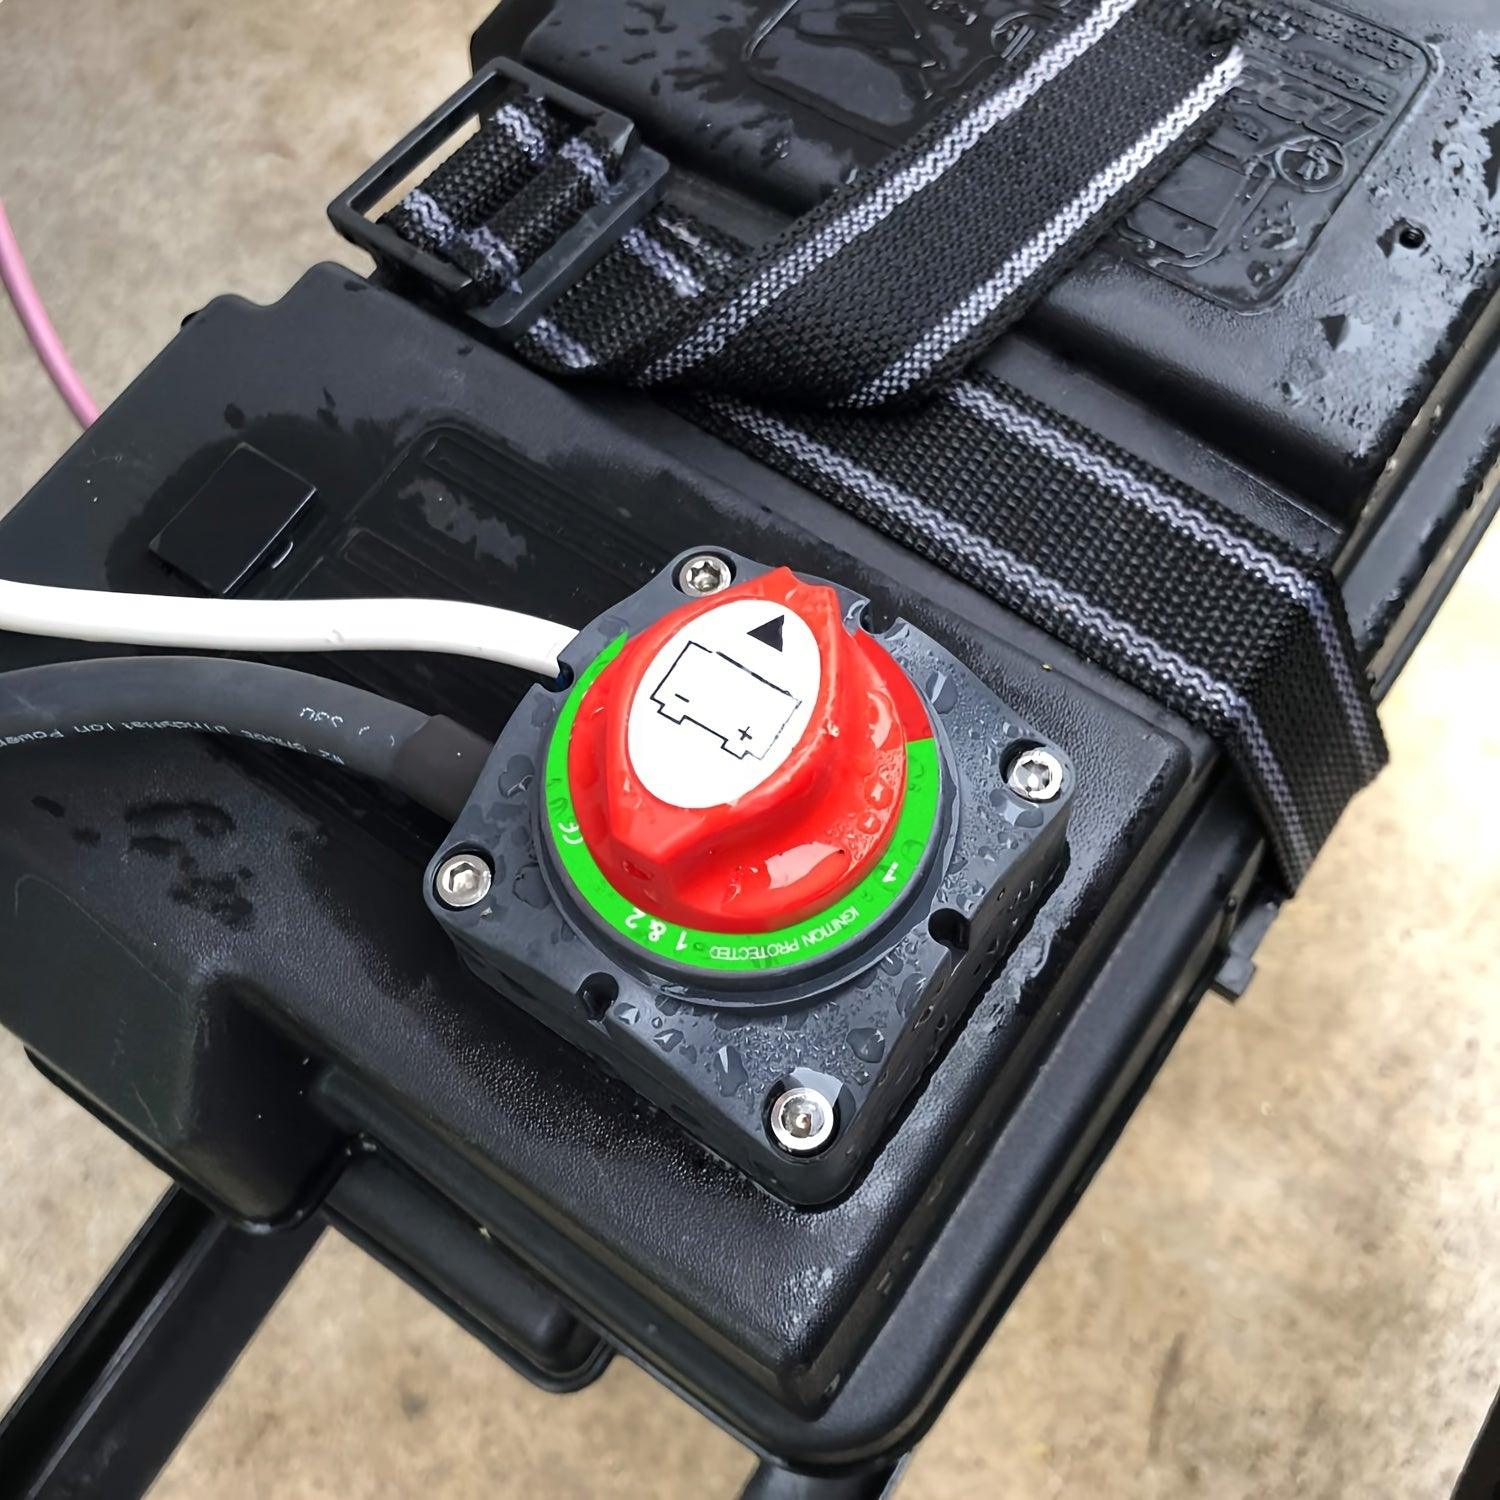 1-2-Both-Off Battery Switch, 12V-48V Battery Disconnect Master Cutoff Switch For Marine Boat Car RV ATV UTV Vehicle, 2 Years Warranty - KinglyDay